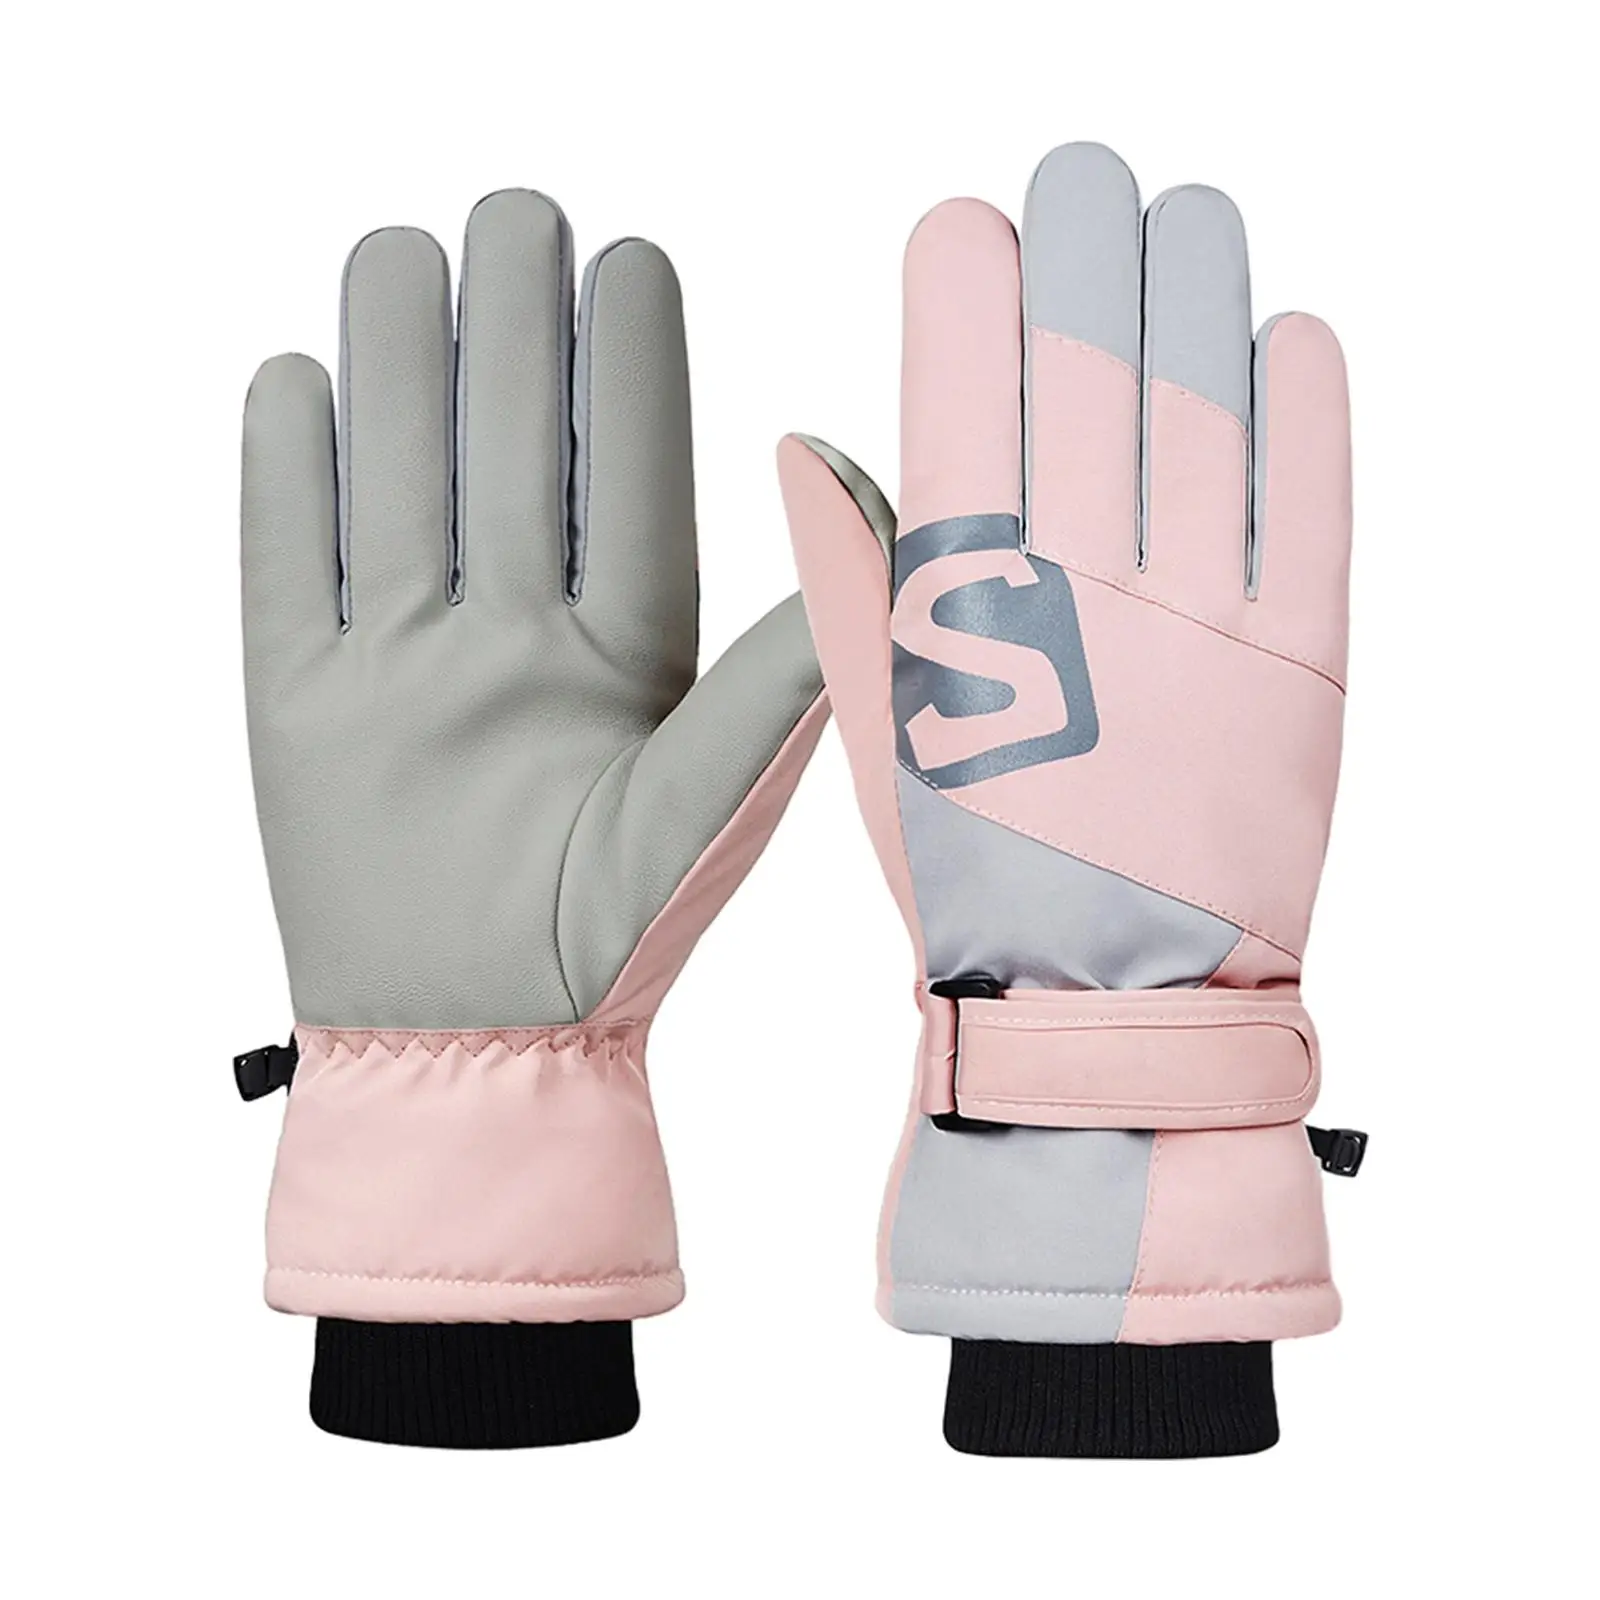 Winter Ski Gloves Touchscreen Mittens Snow Ski Gloves for Snow Skiing Biking